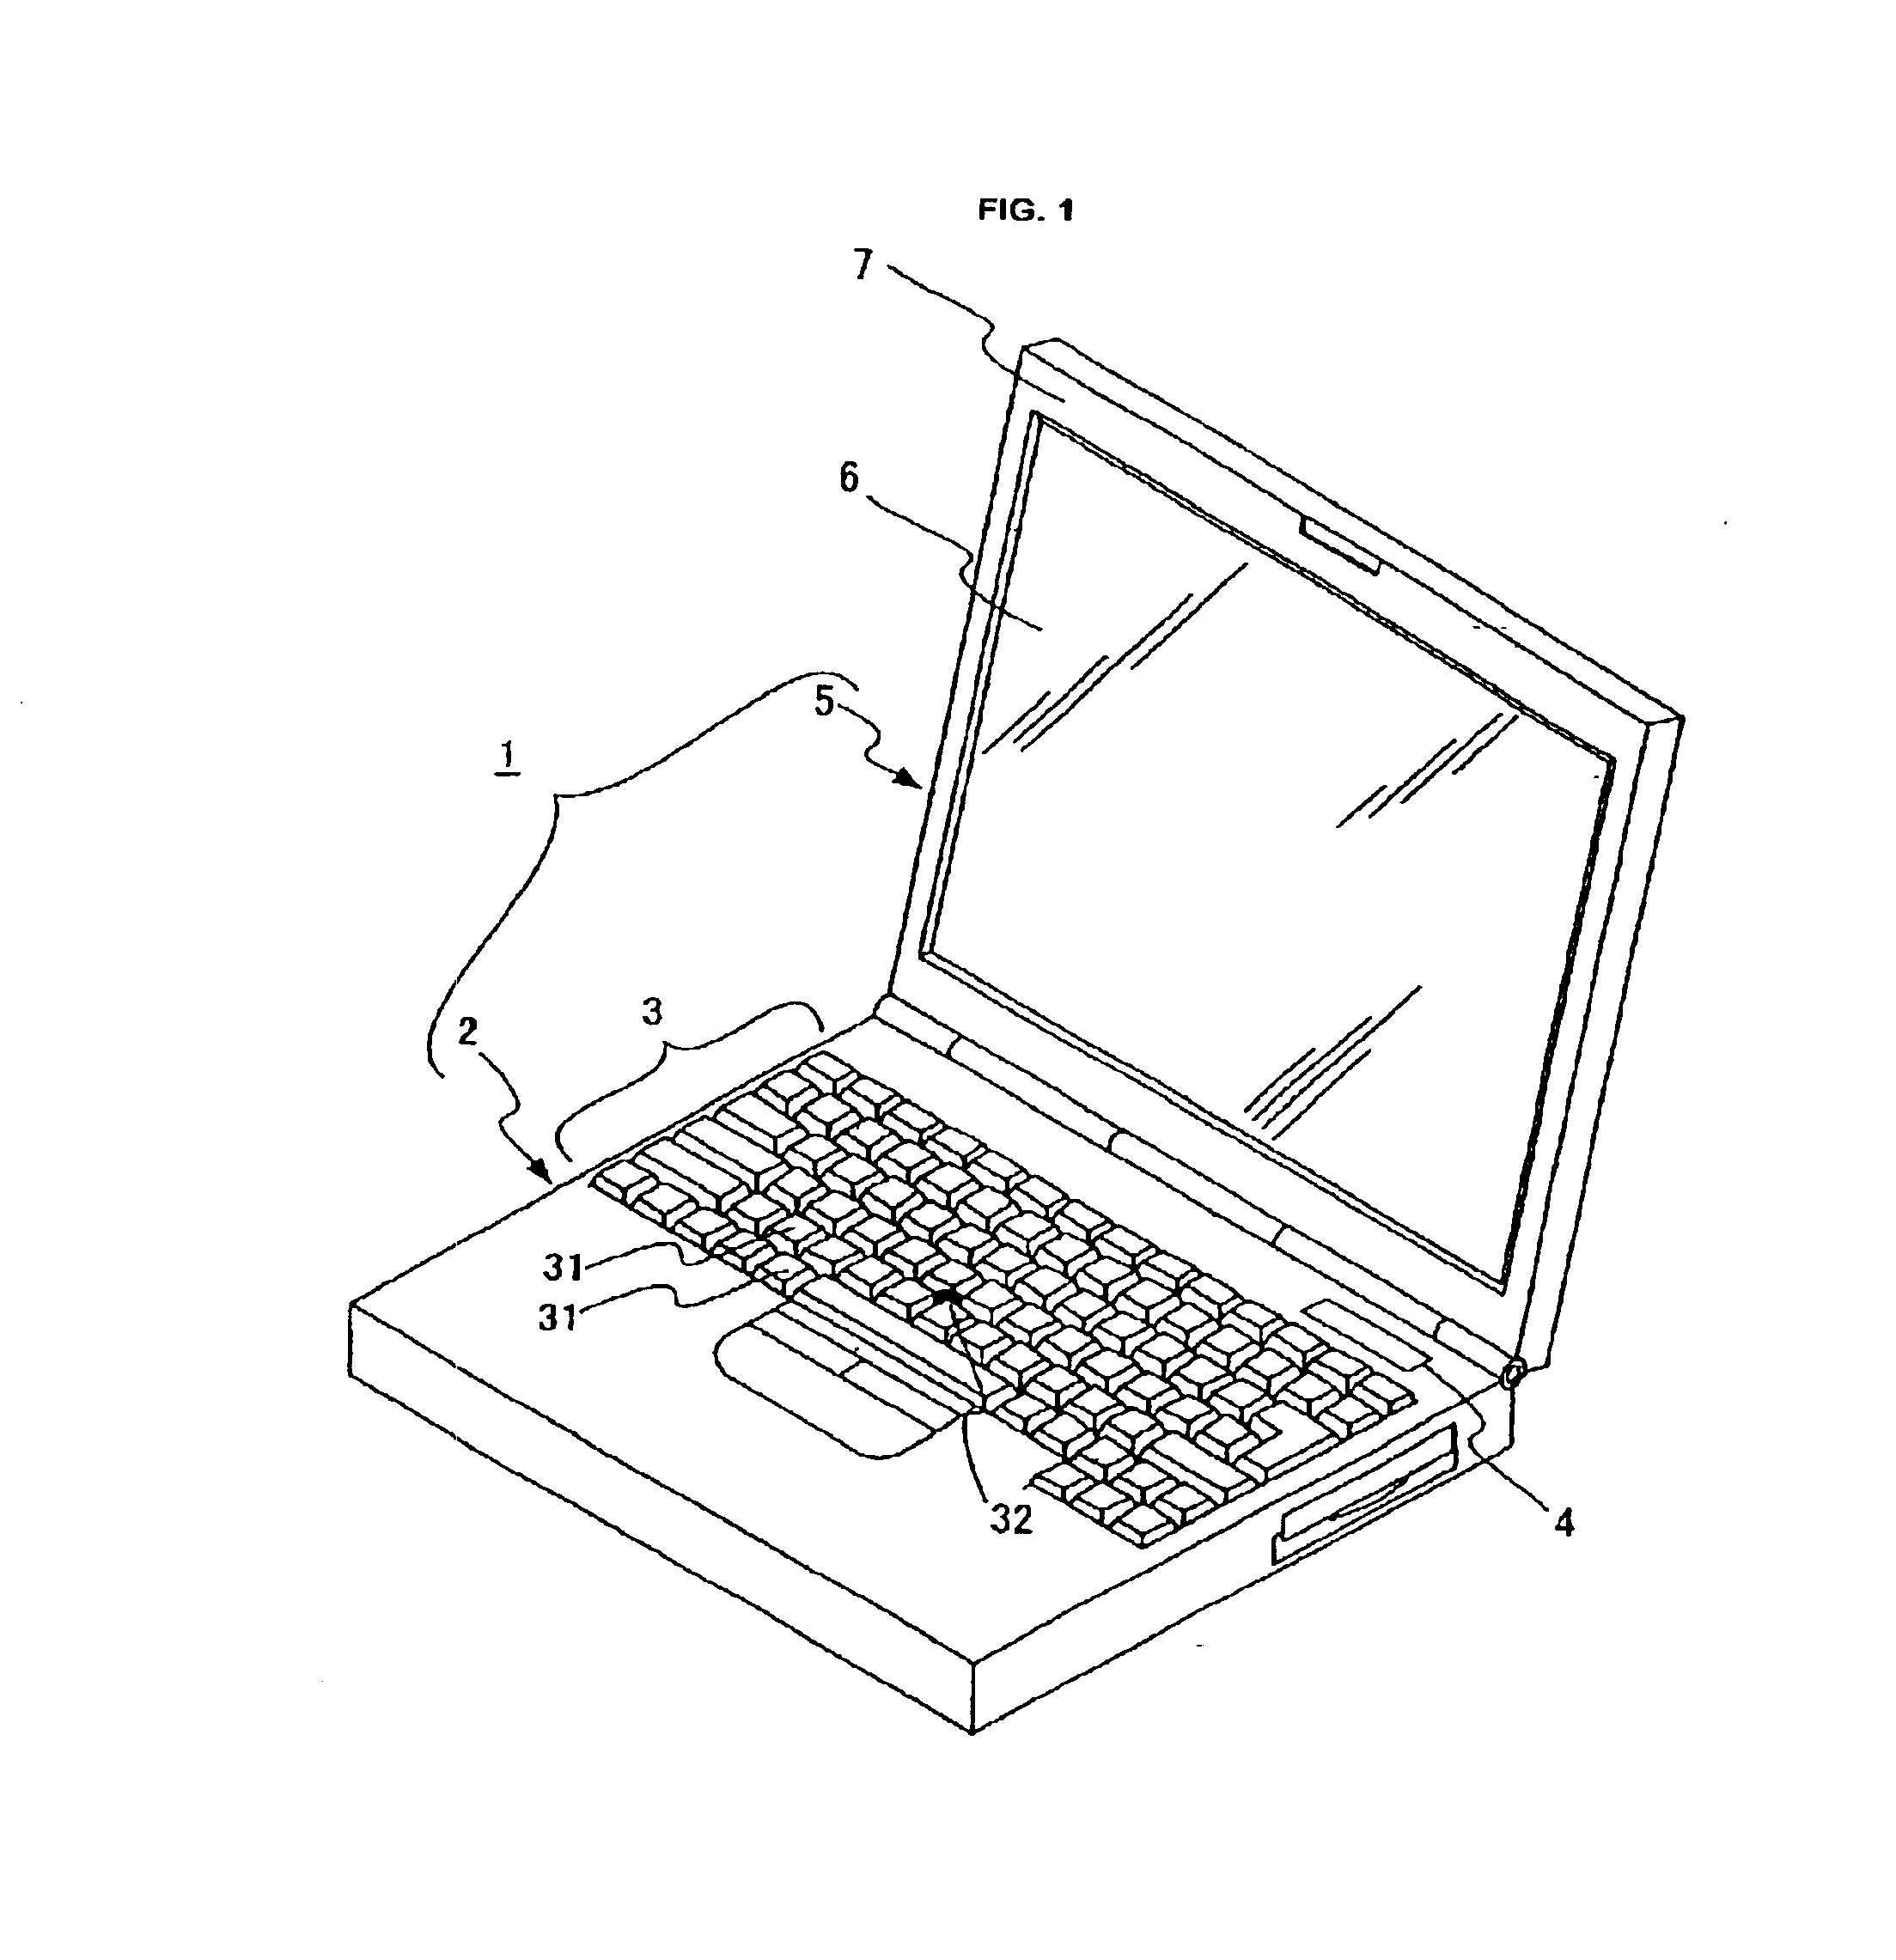 Computer and method providing for illumination of keyboard